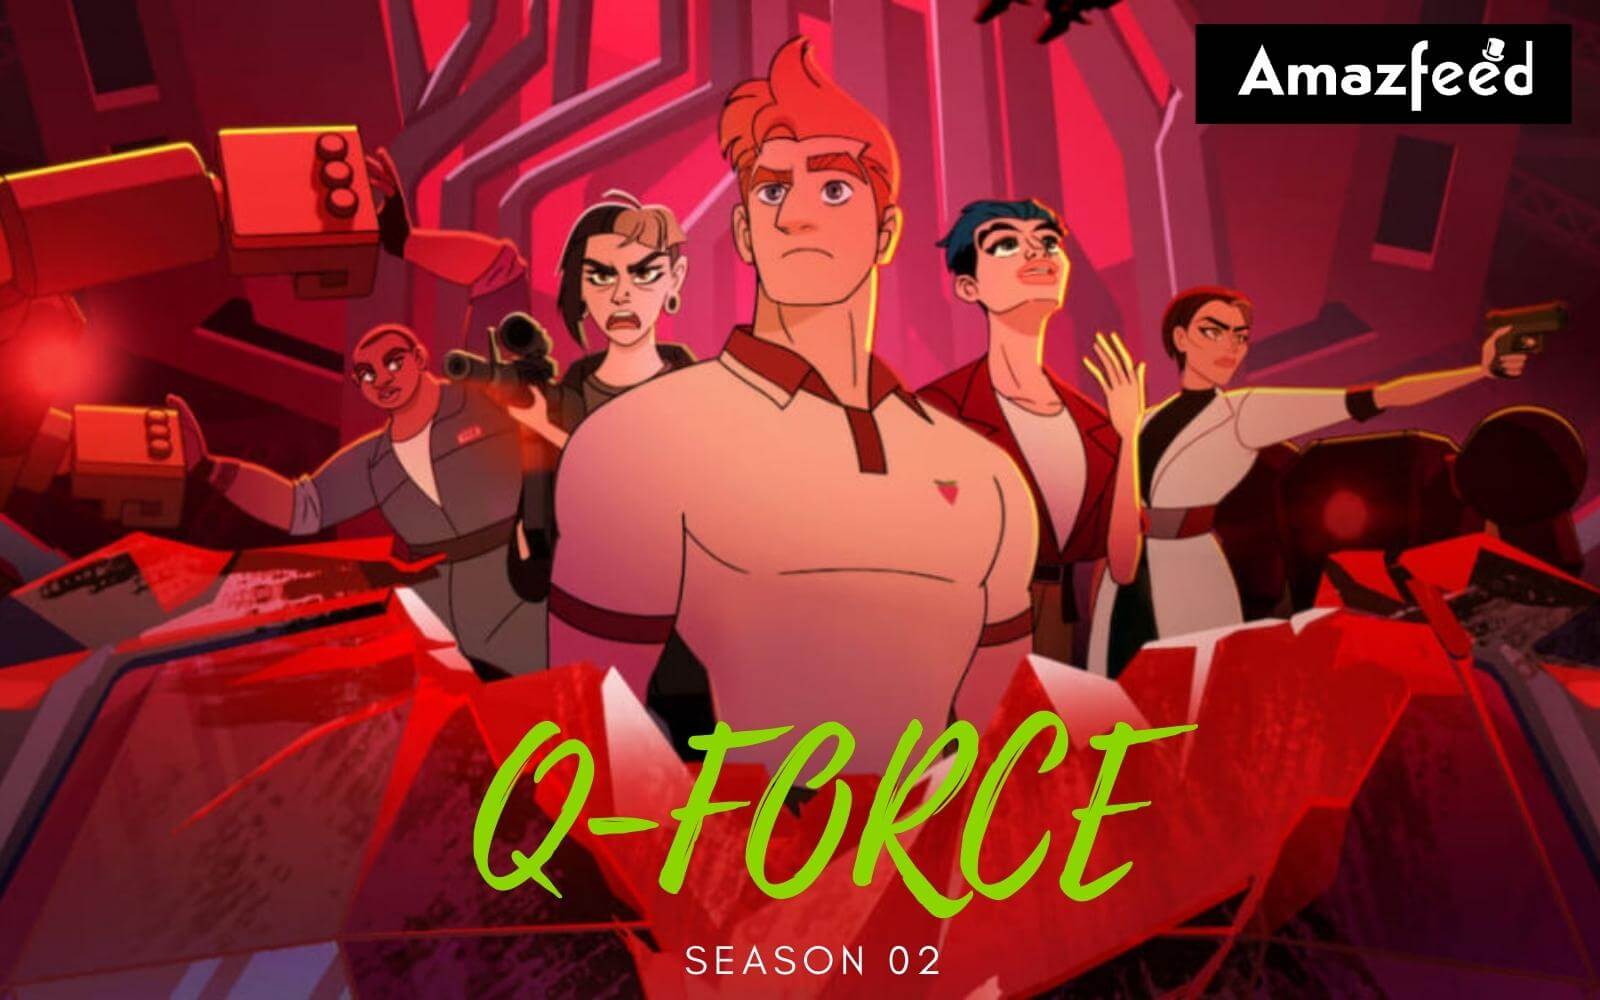 Q-FORCE Season 2